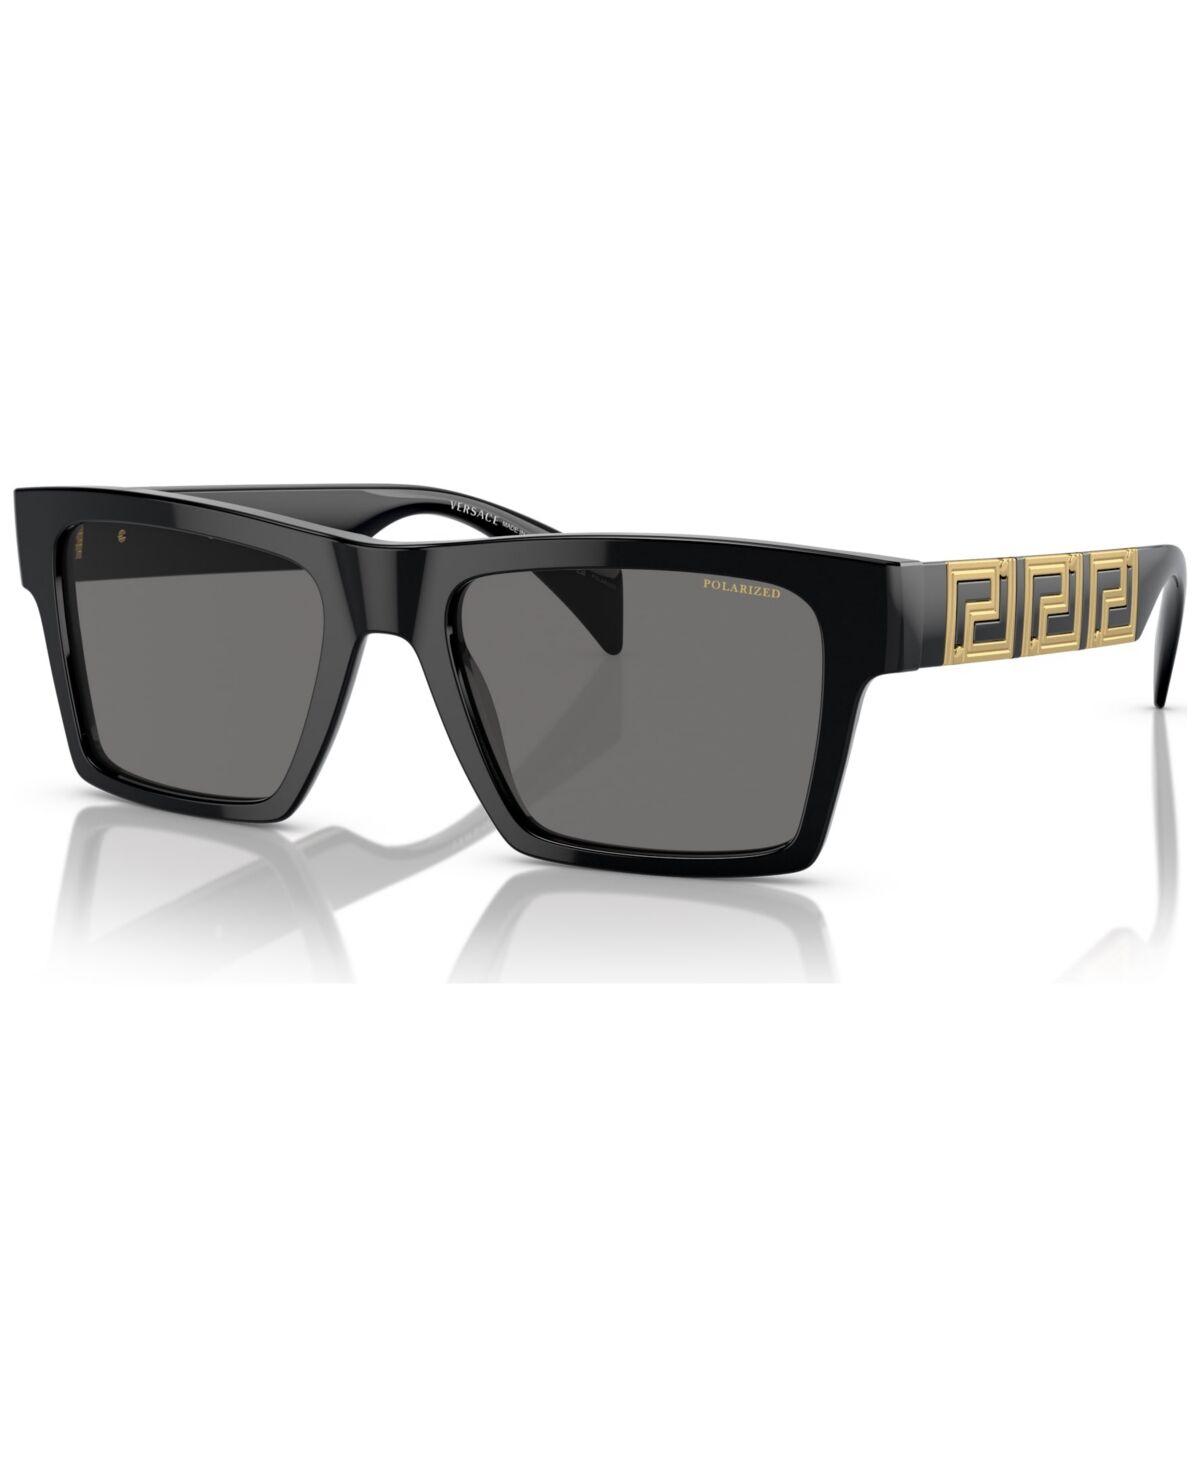 Versace Men's Polarized Sunglasses, VE4445 - Black